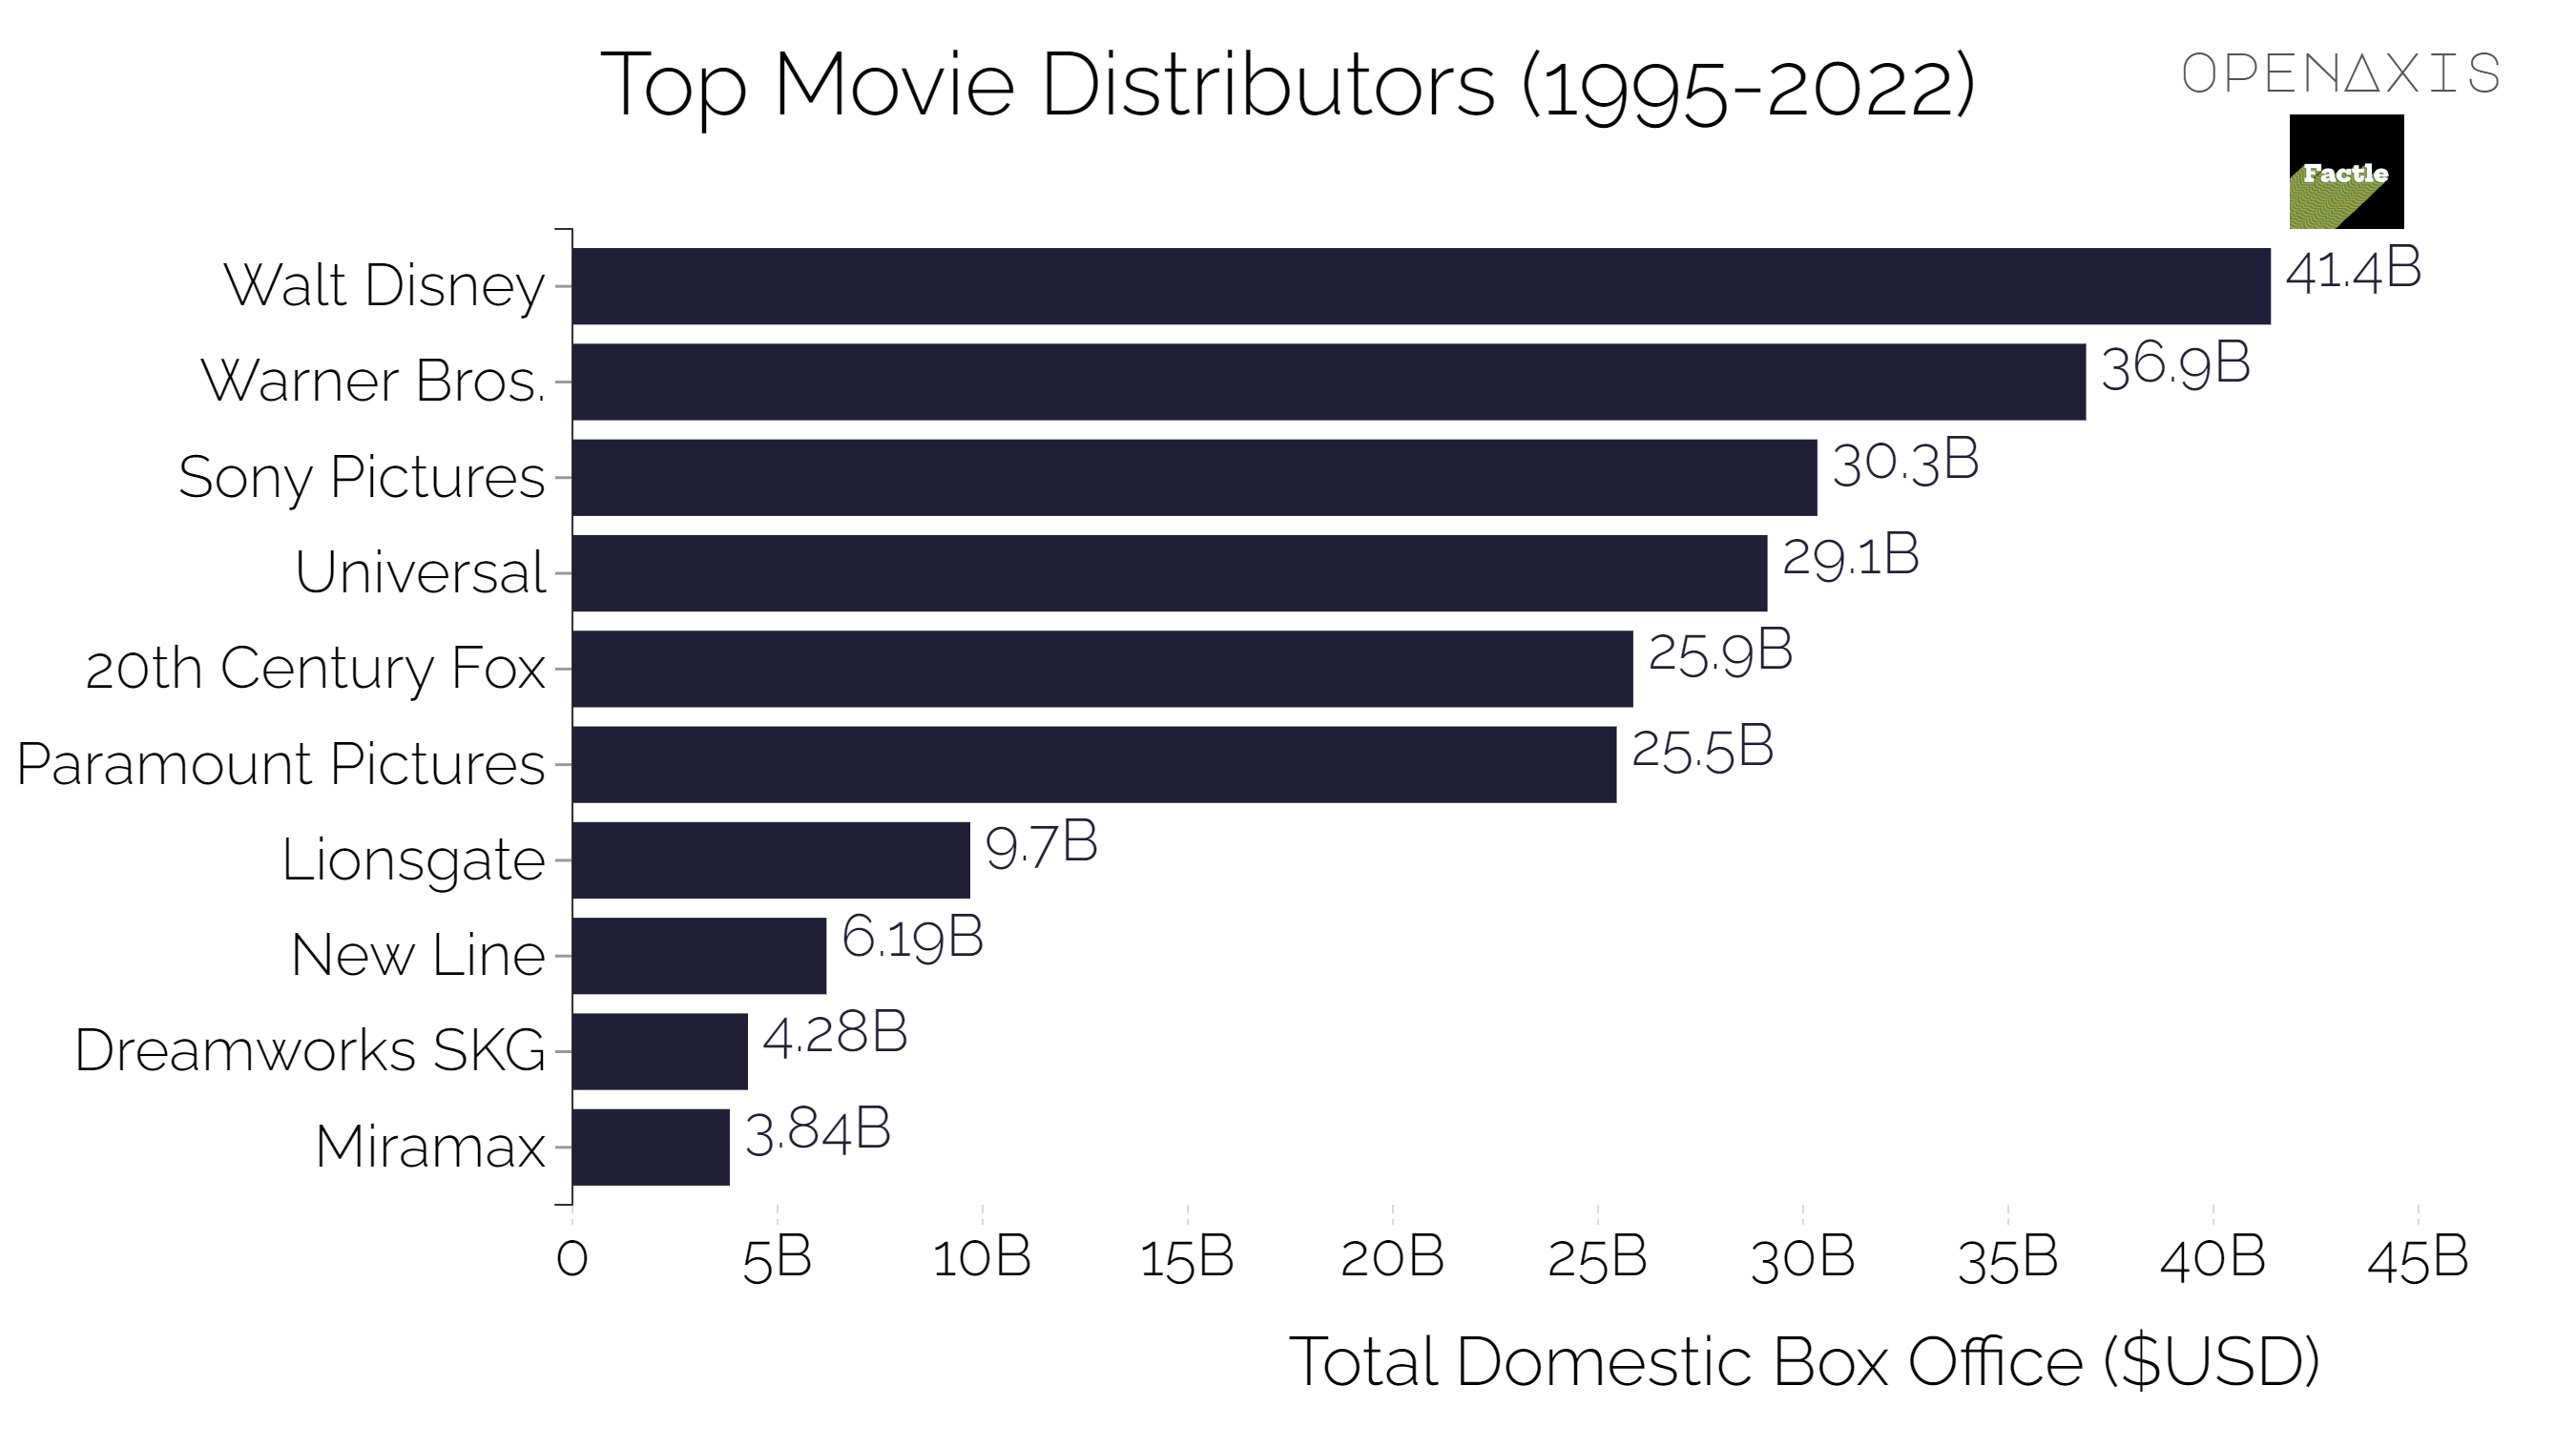 "Top Movie Distributors (1995-2022)"